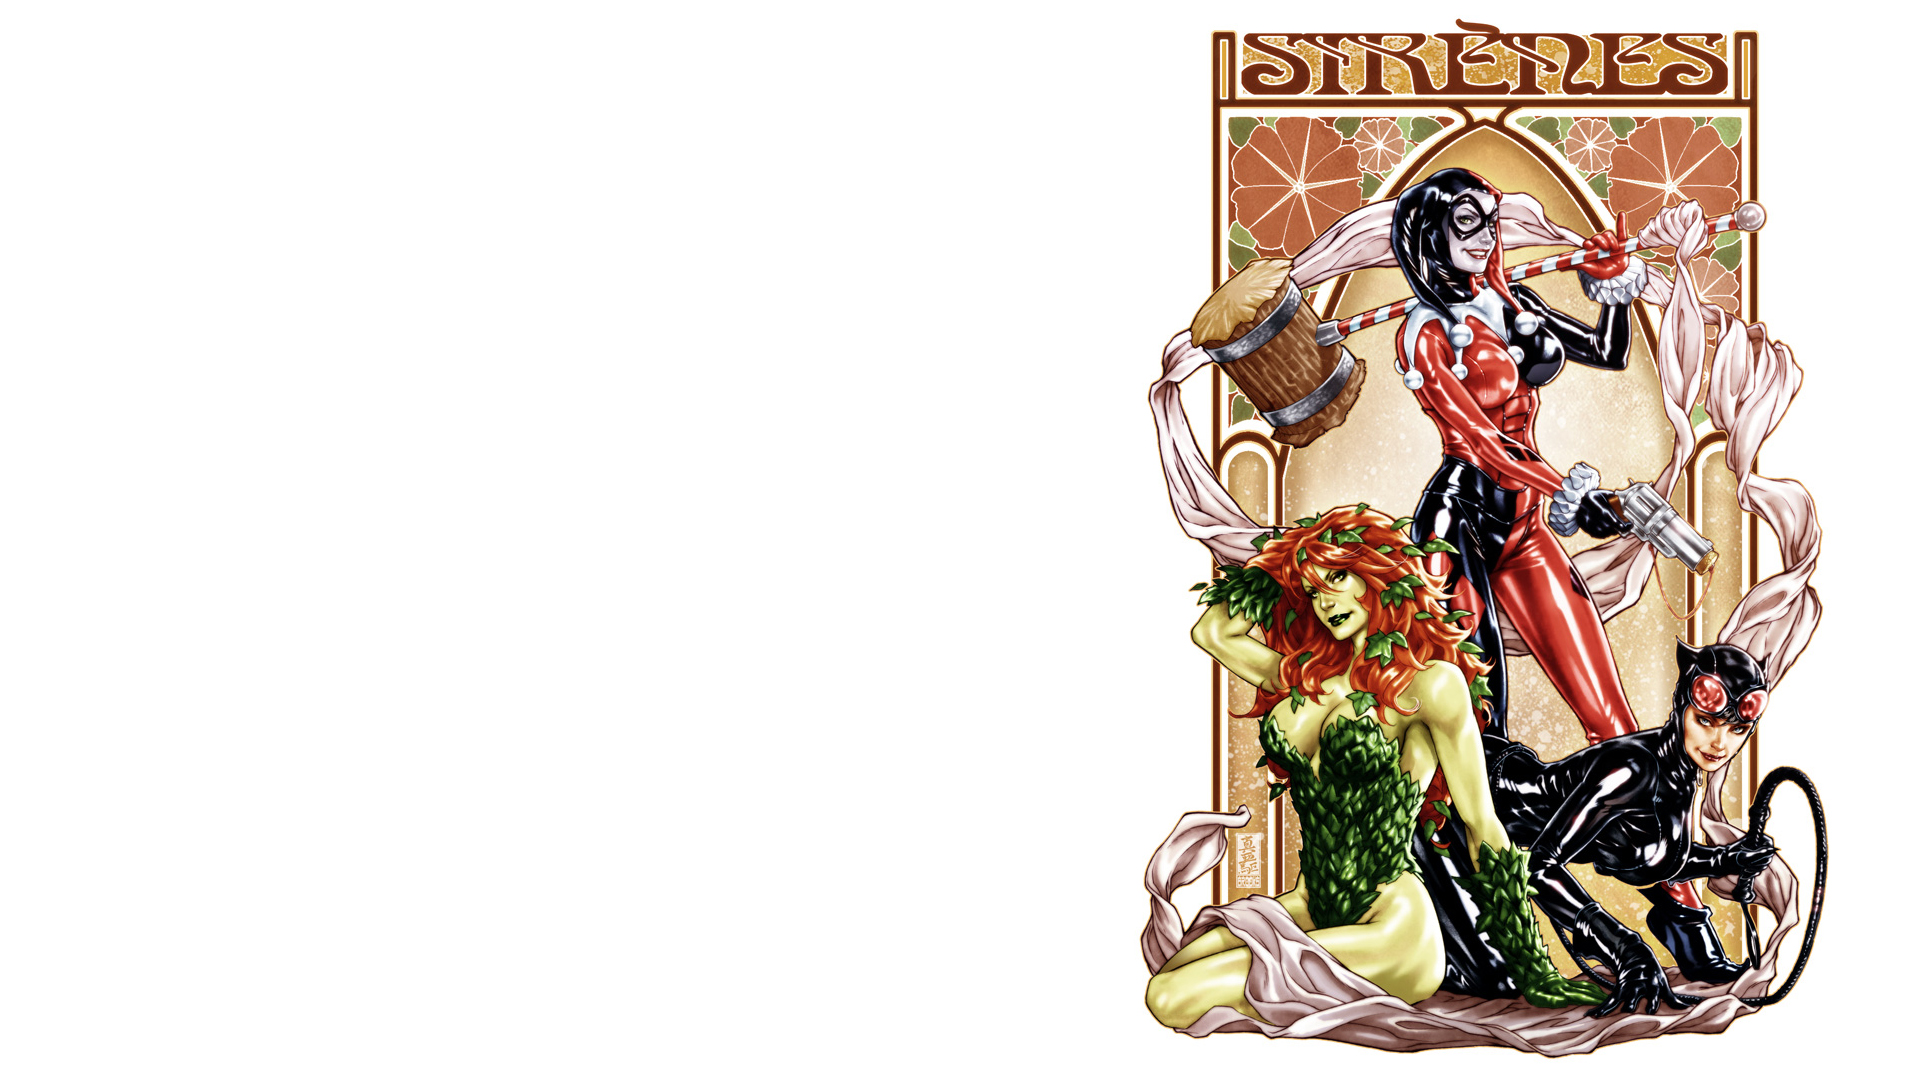 Harley Quinn, Catwoman, Poison Ivy, Art Nouveau, stained glass - desktop wallpaper